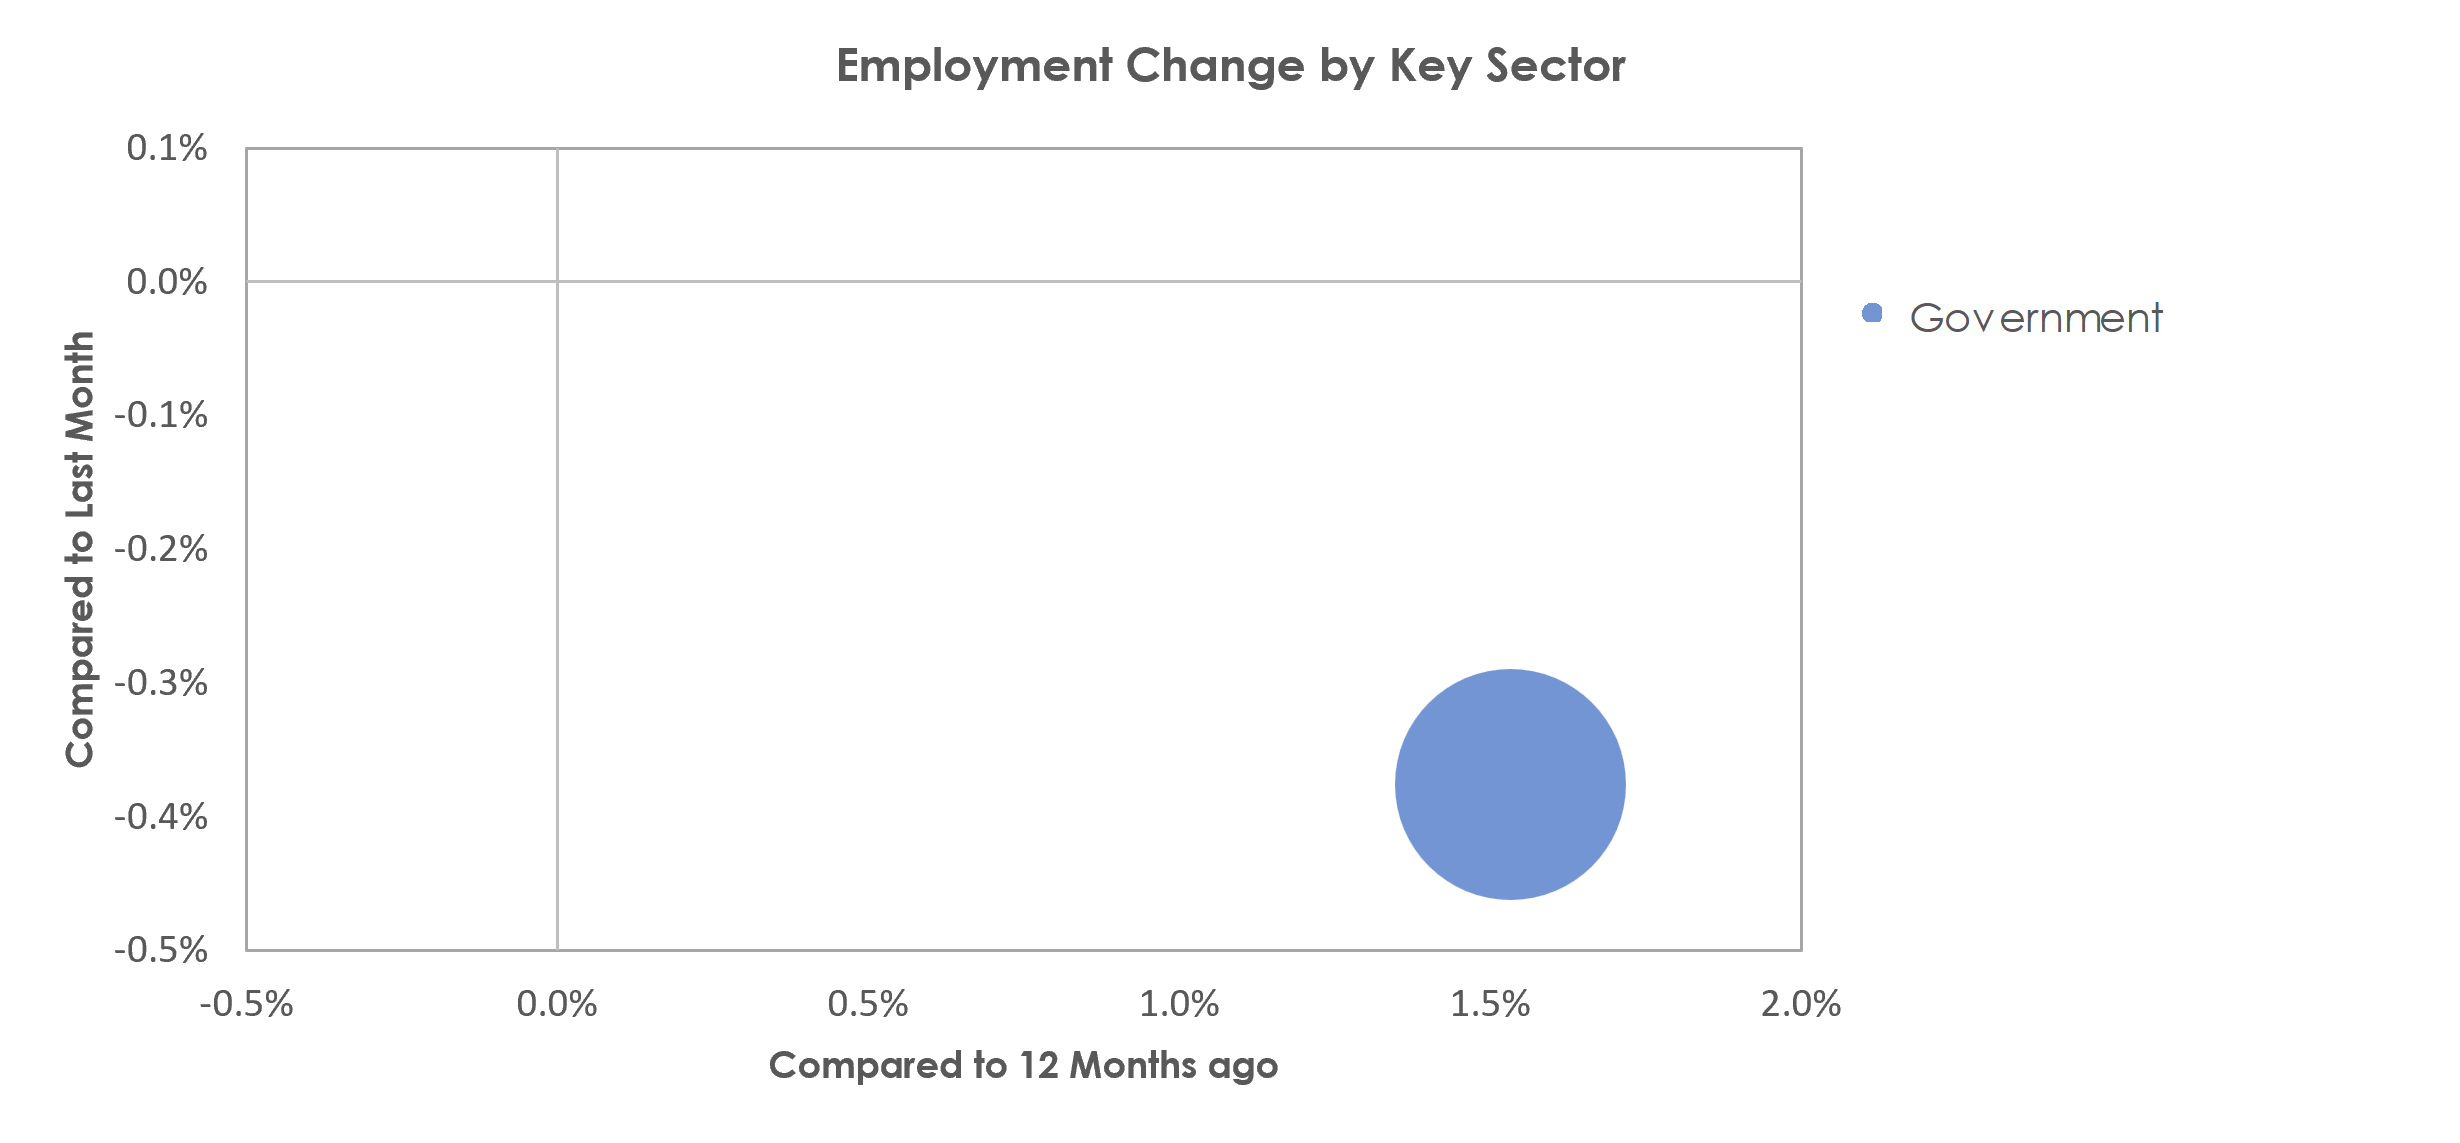 Blacksburg-Christiansburg-Radford, VA Unemployment by Industry March 2023